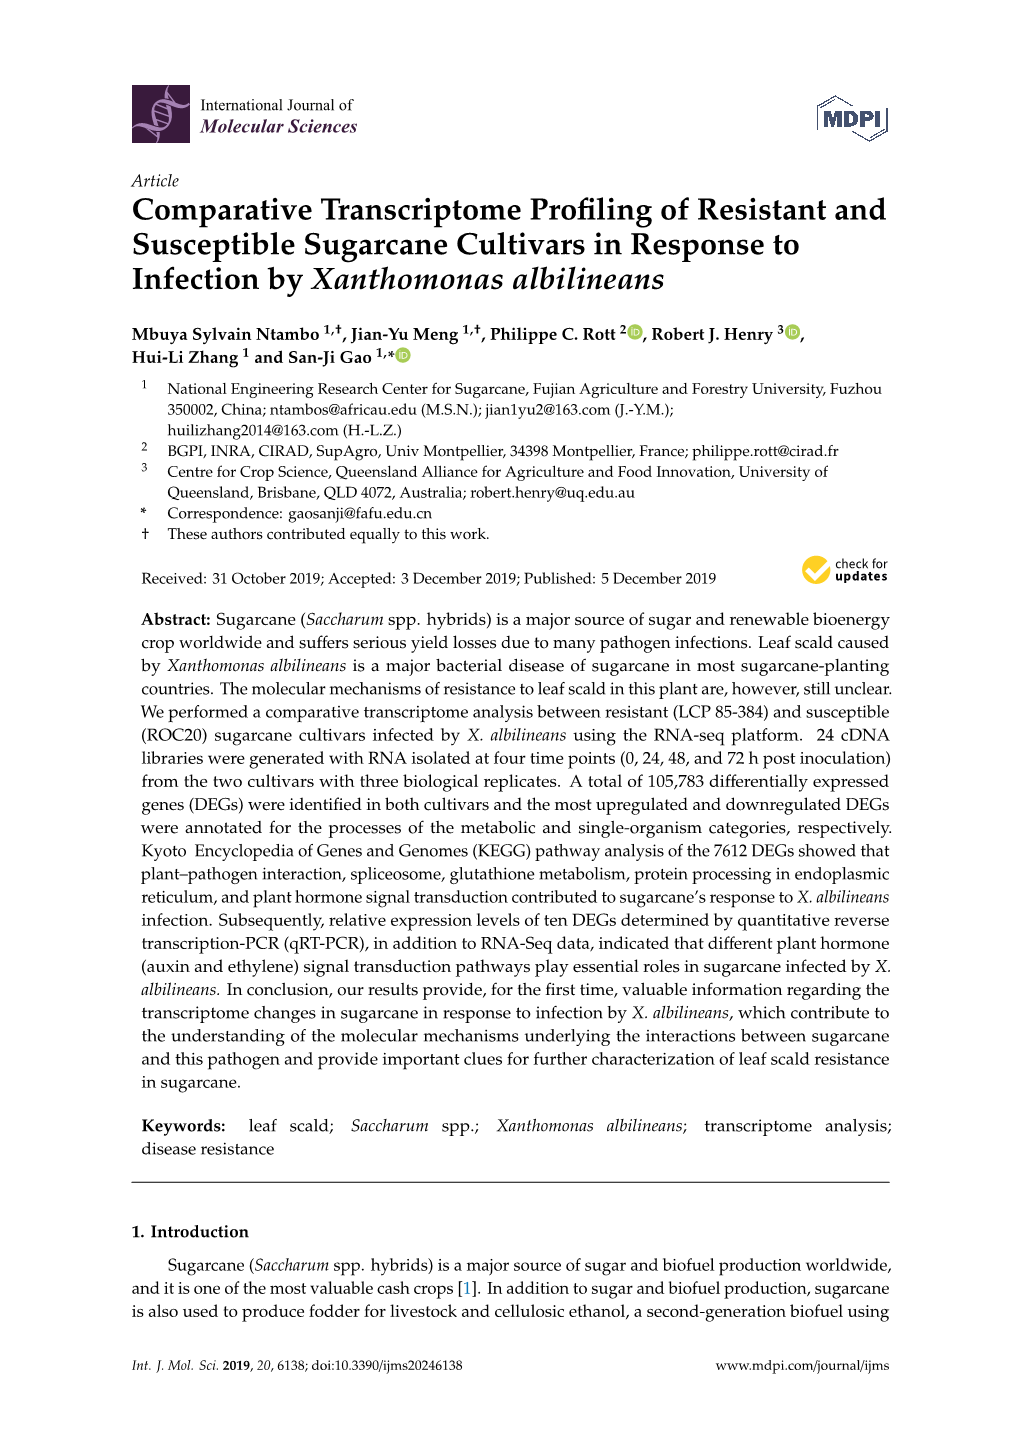 Comparative Transcriptome Profiling of Resistant and Susceptible